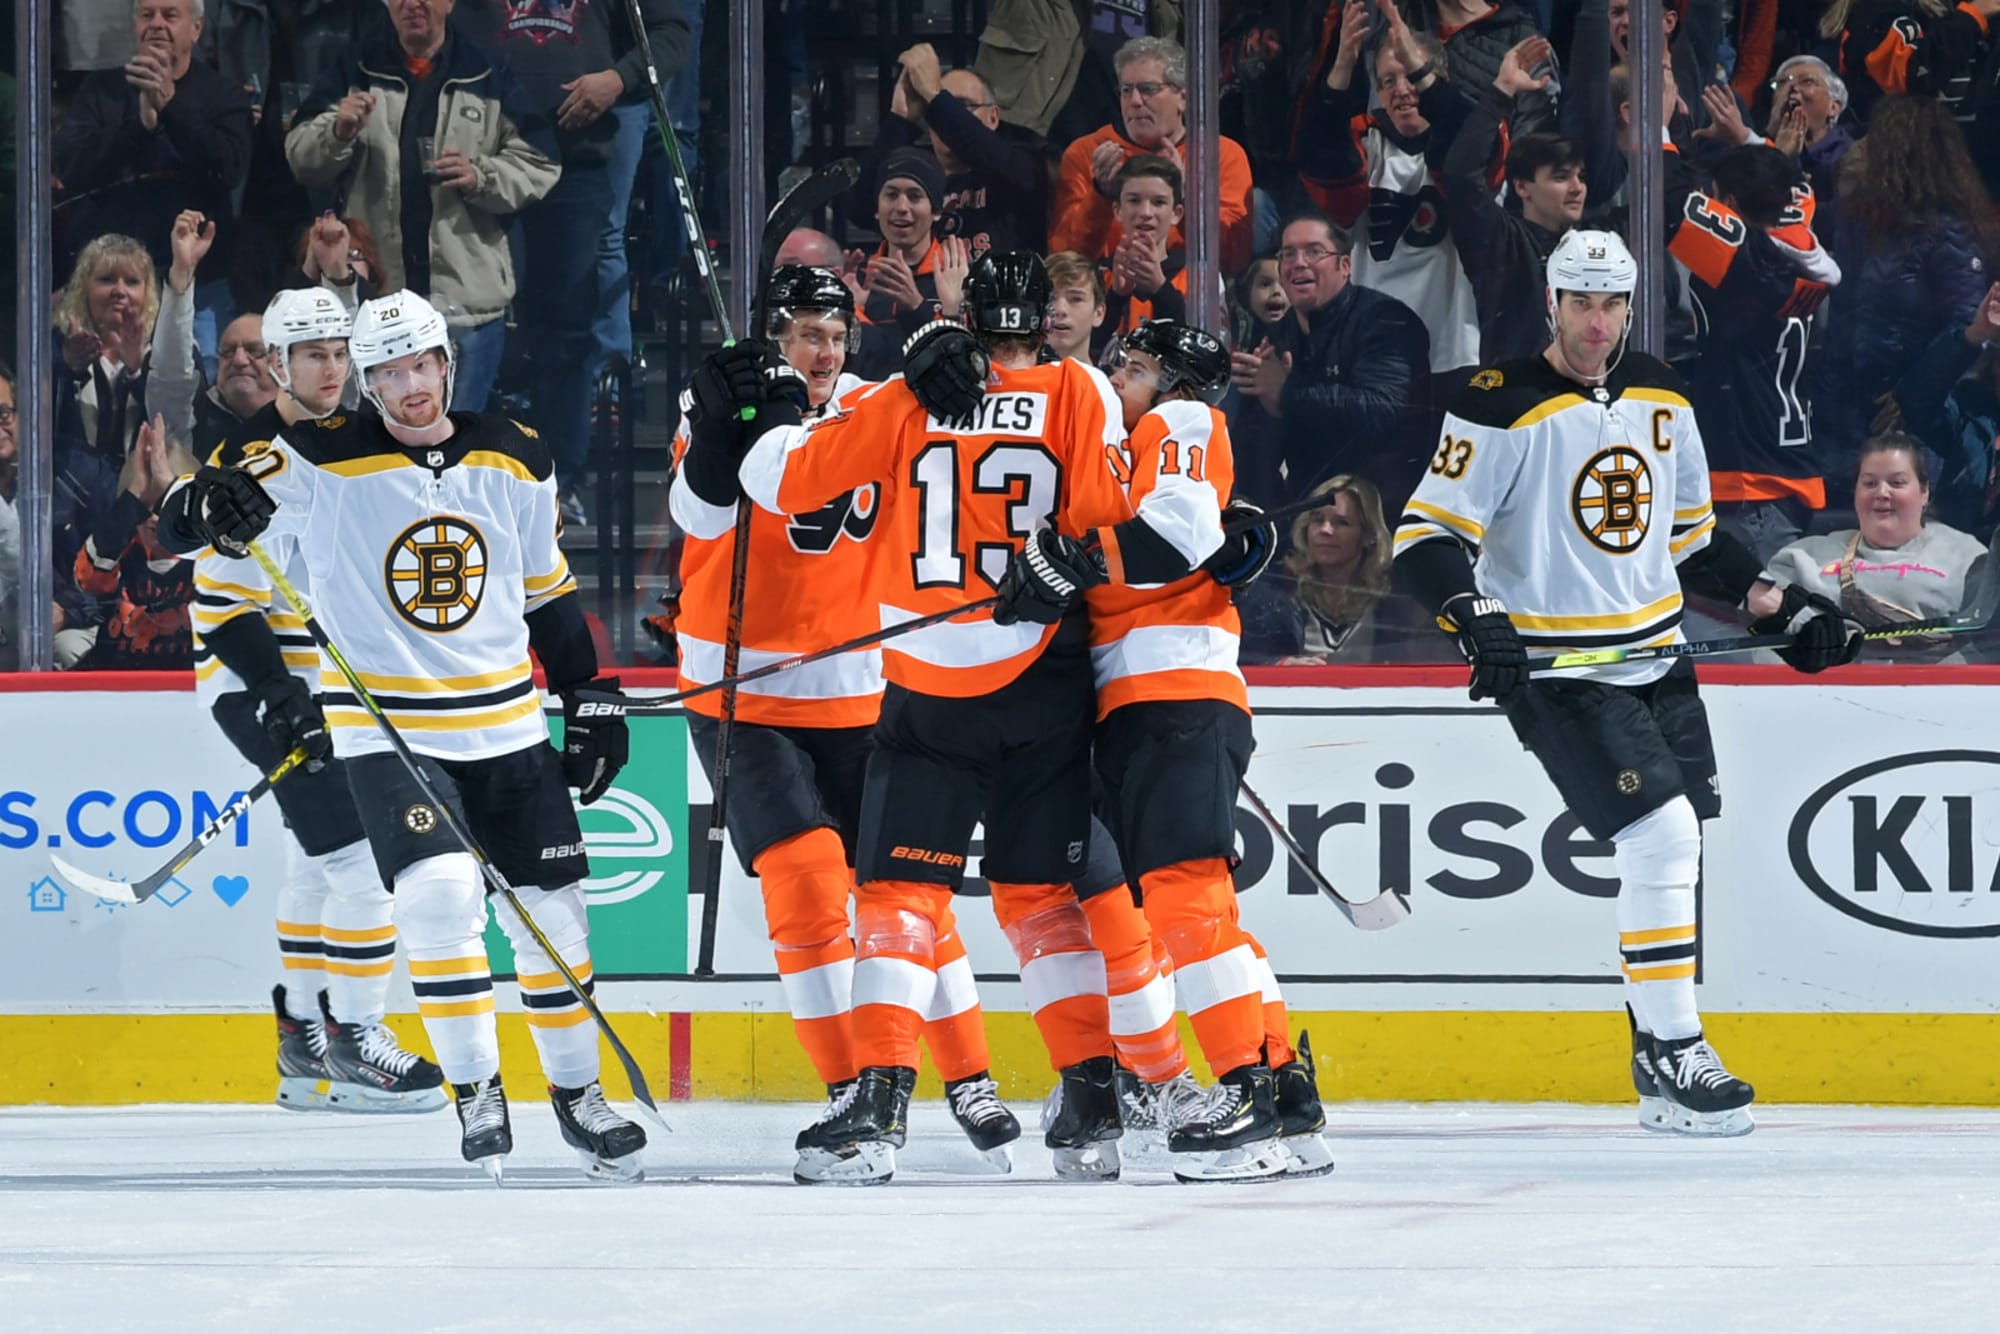 Philadelphia Flyers: Season turned around with win over Bruins